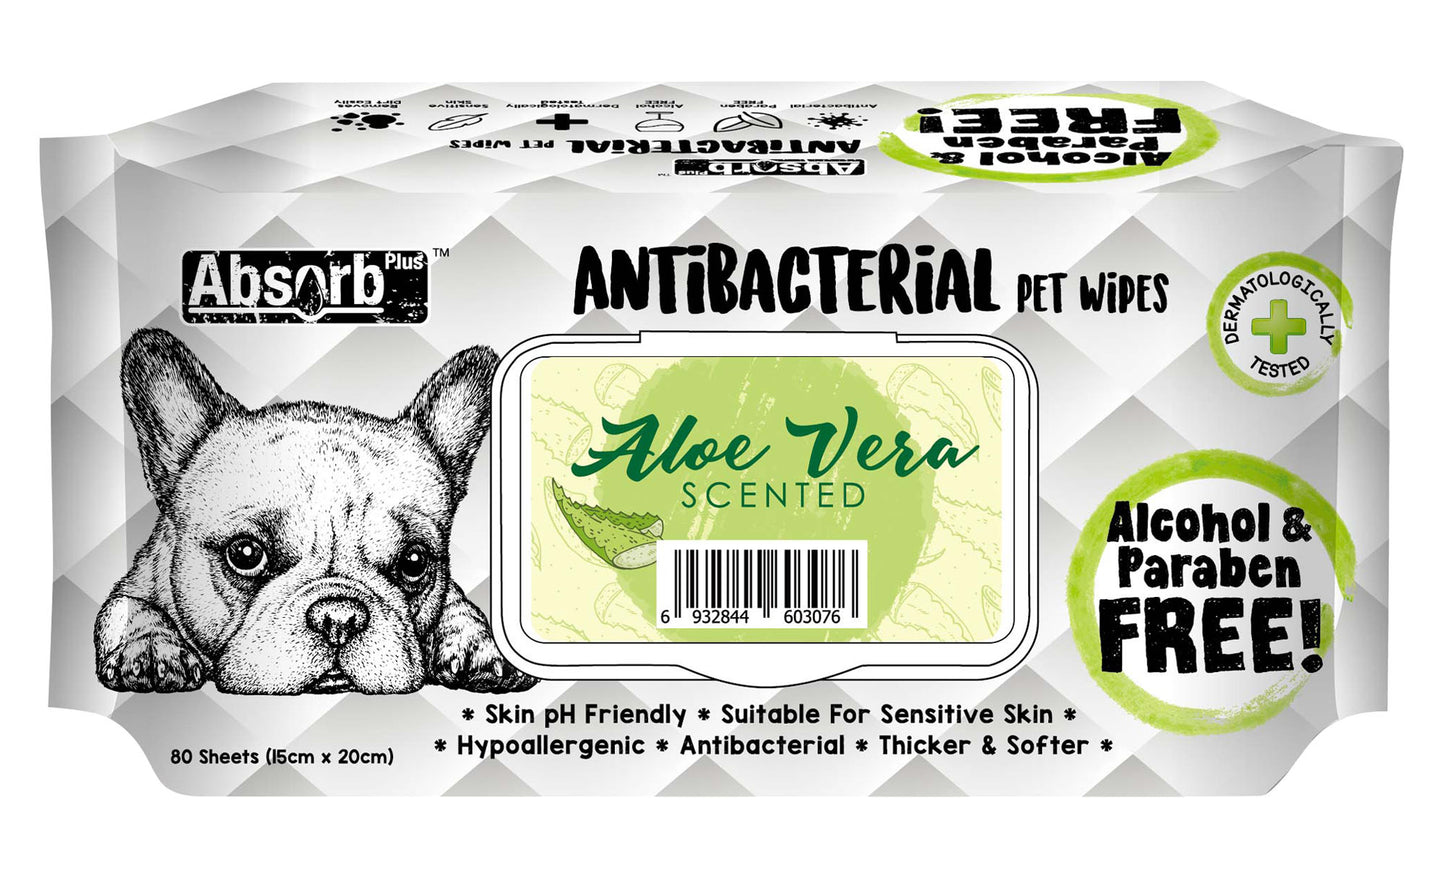 Absorb Plus AntiBacterial Pet Wipes 80pcs